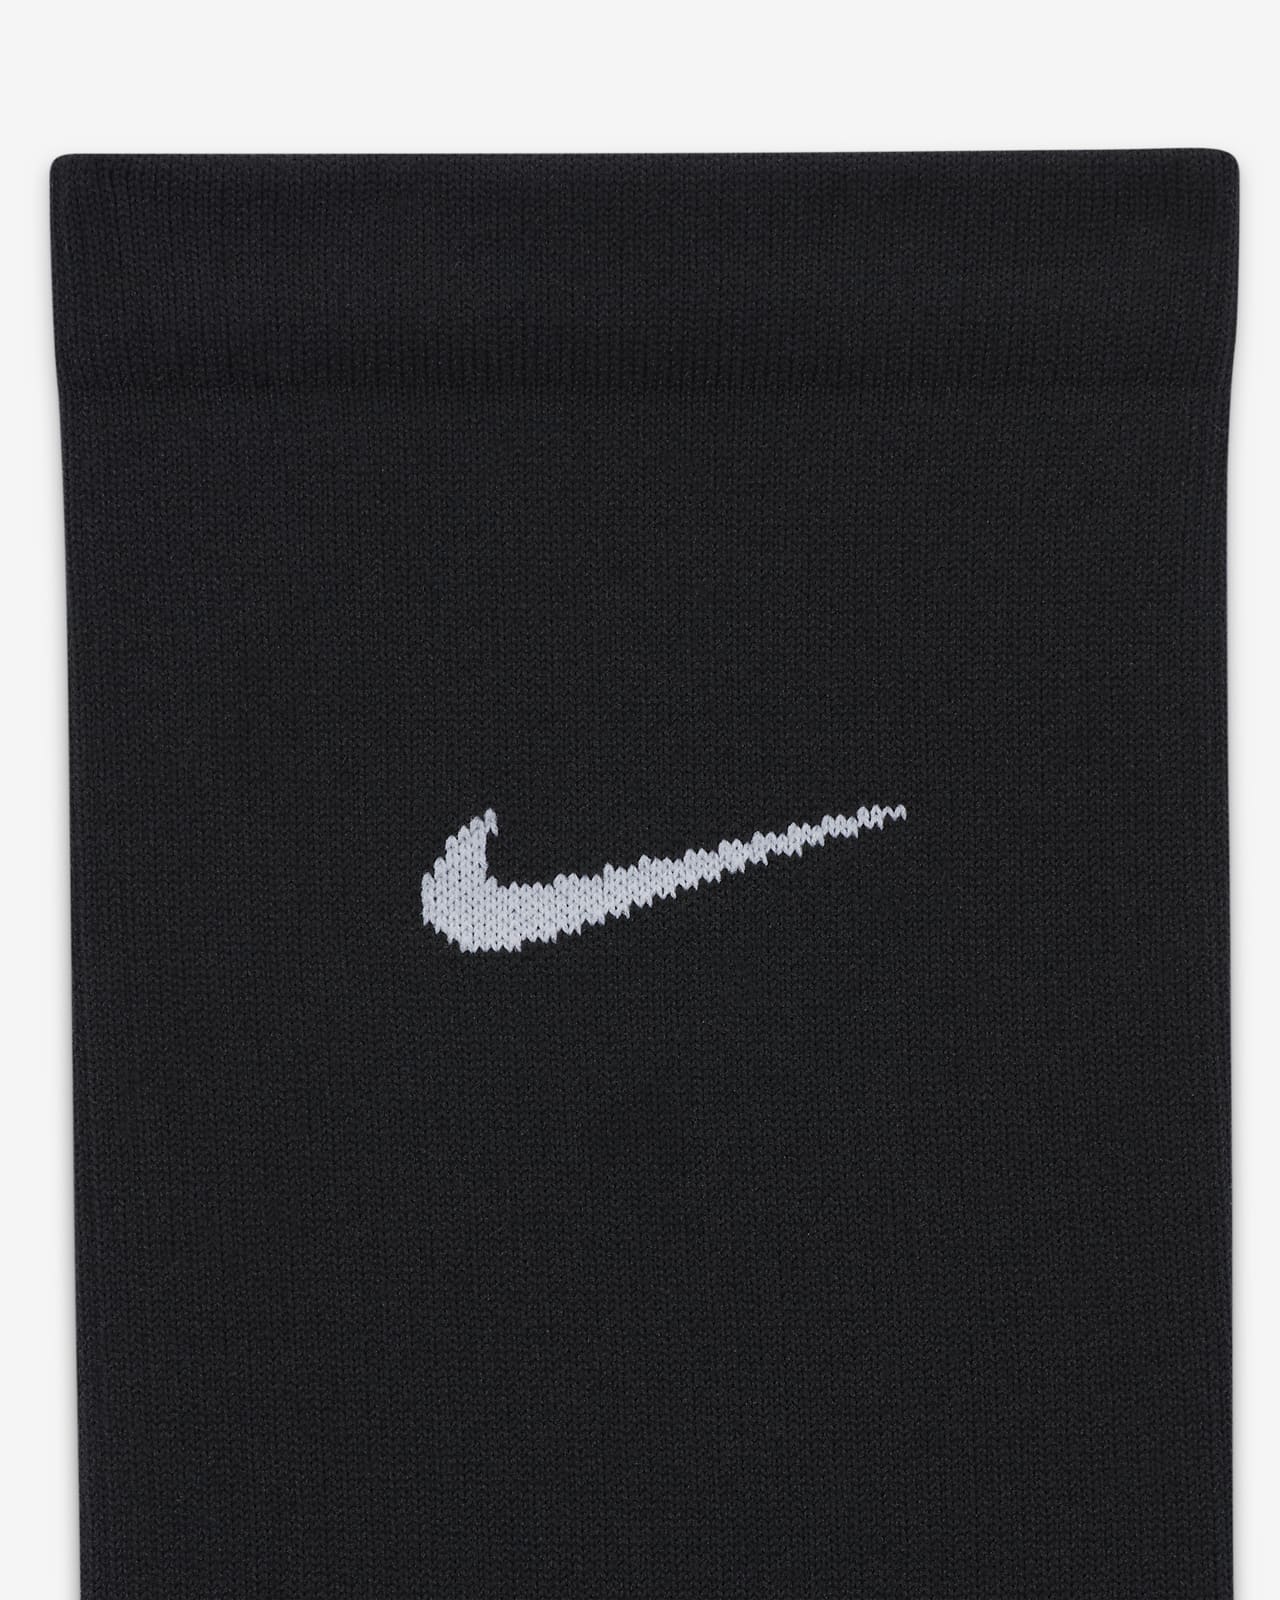 colonia Fielmente mostrador NikeGrip Vapor Strike Football Crew Socks. Nike LU